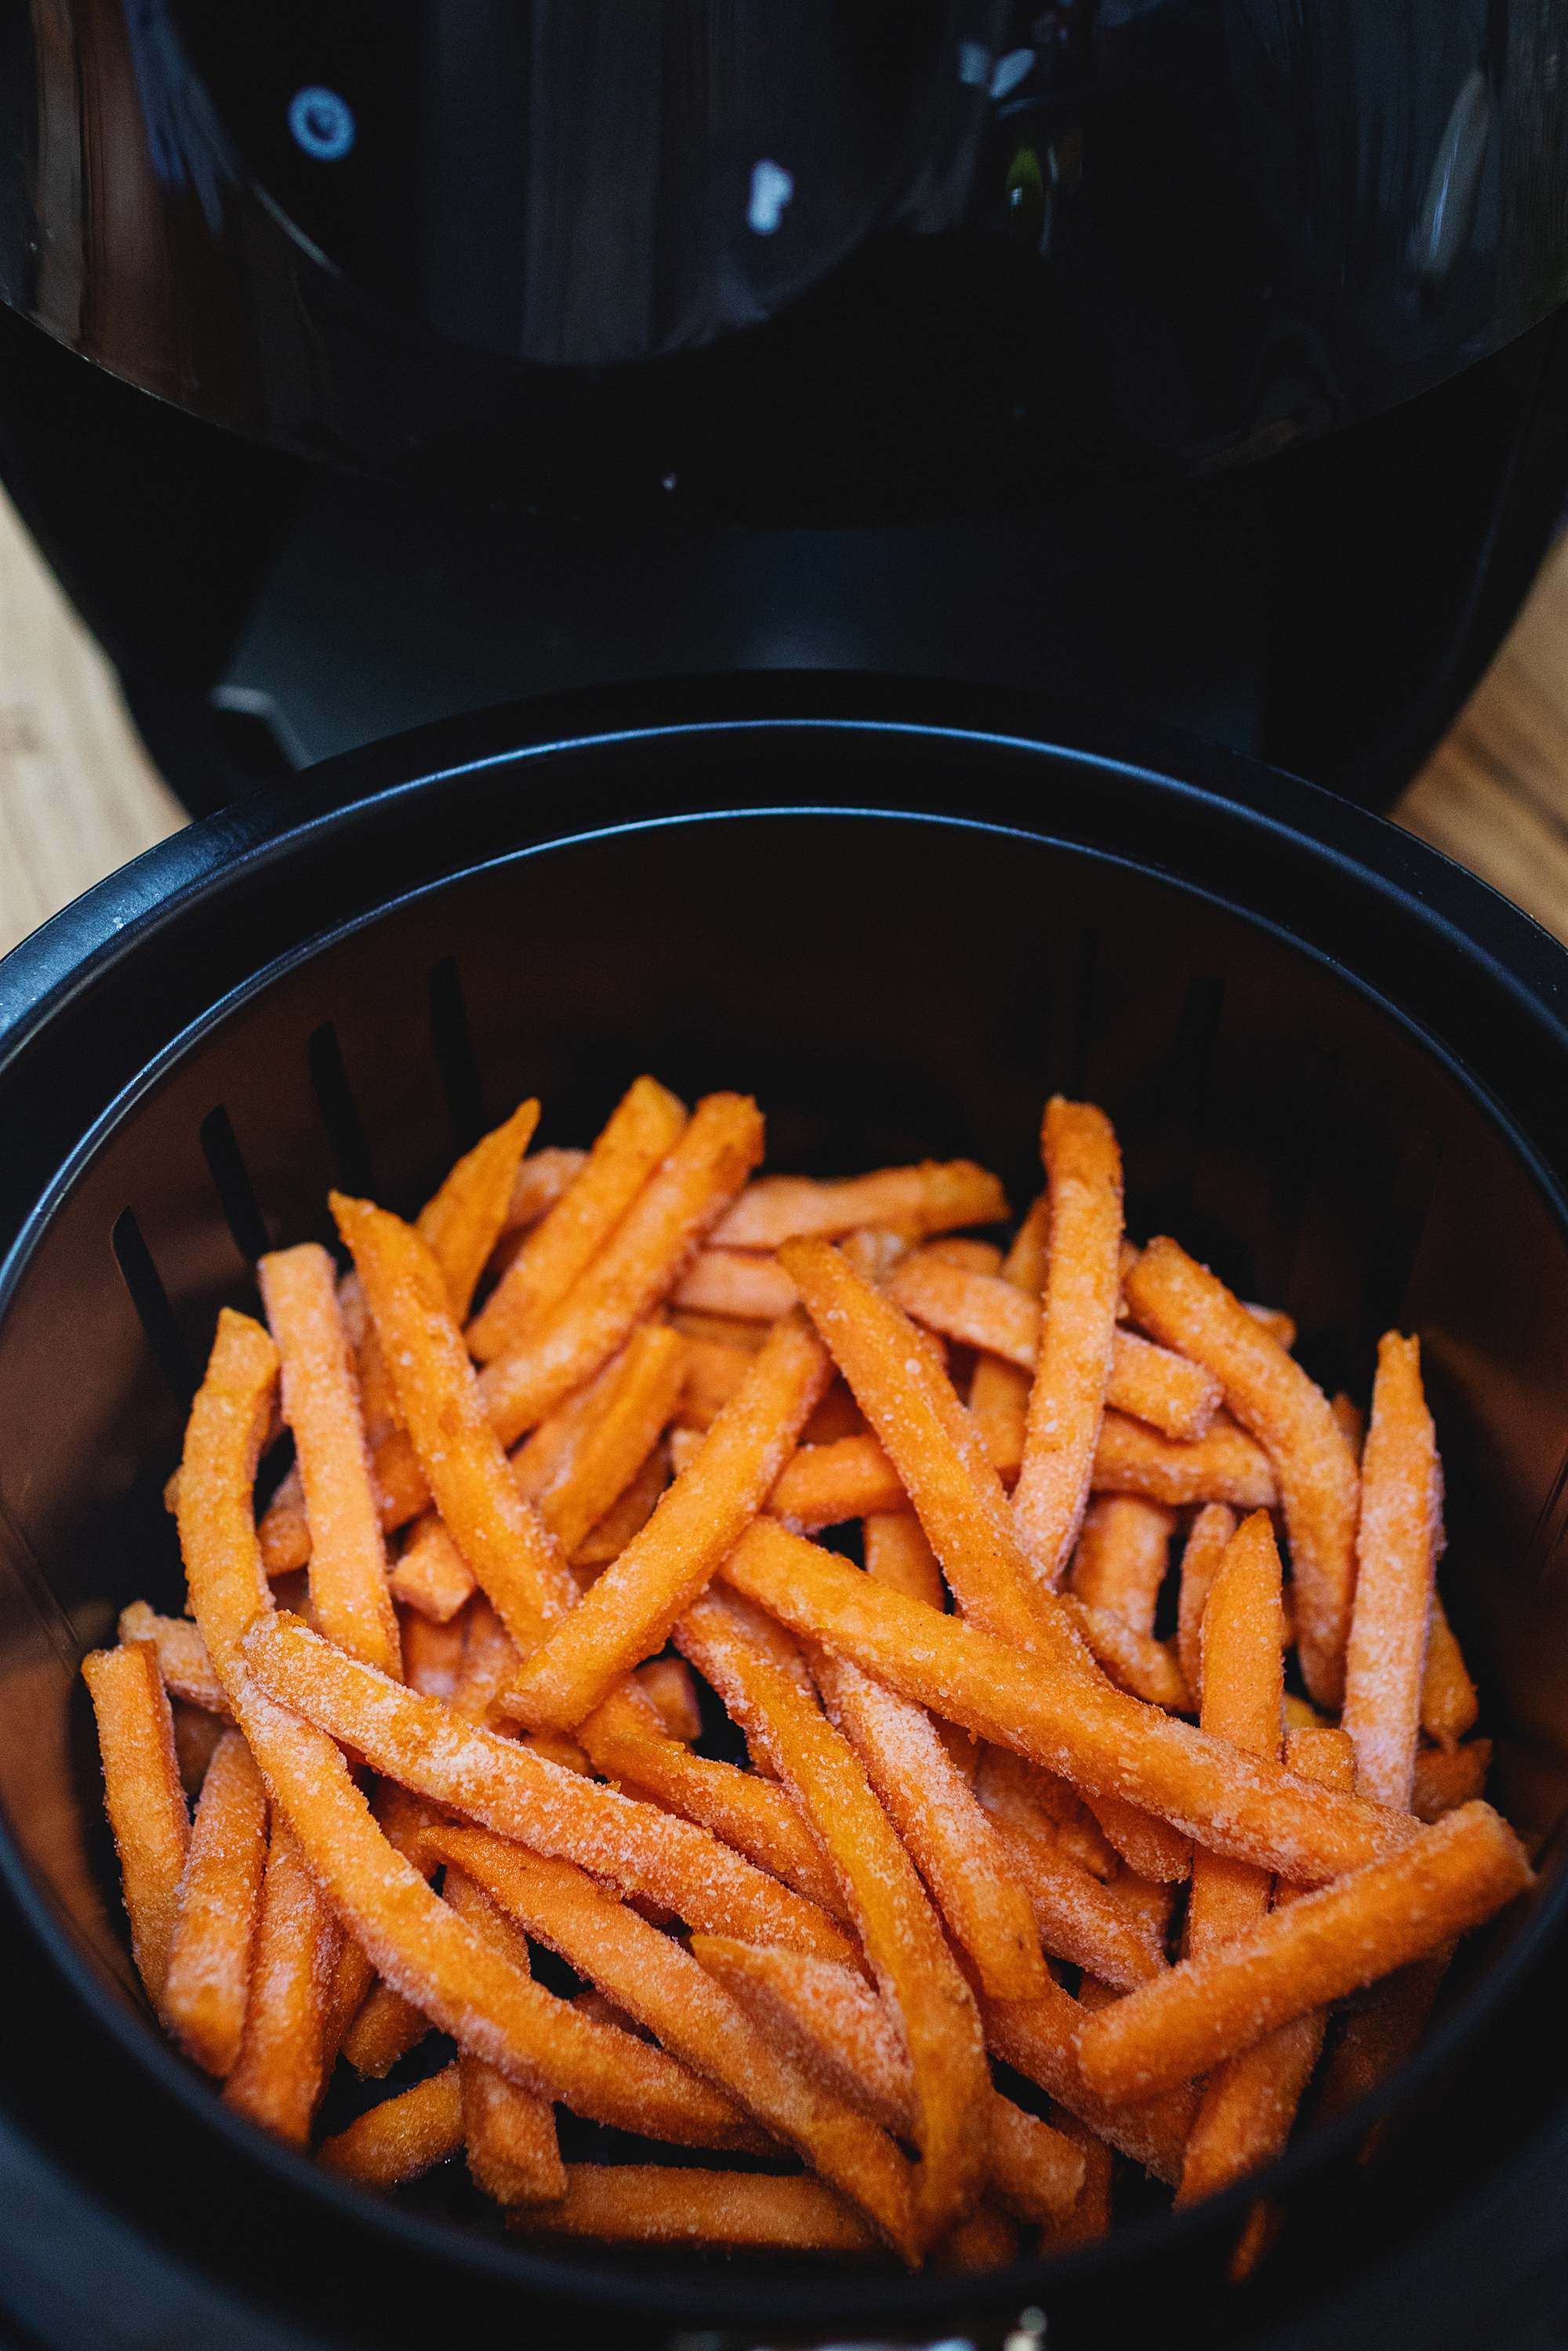 frozen sweet potato fries